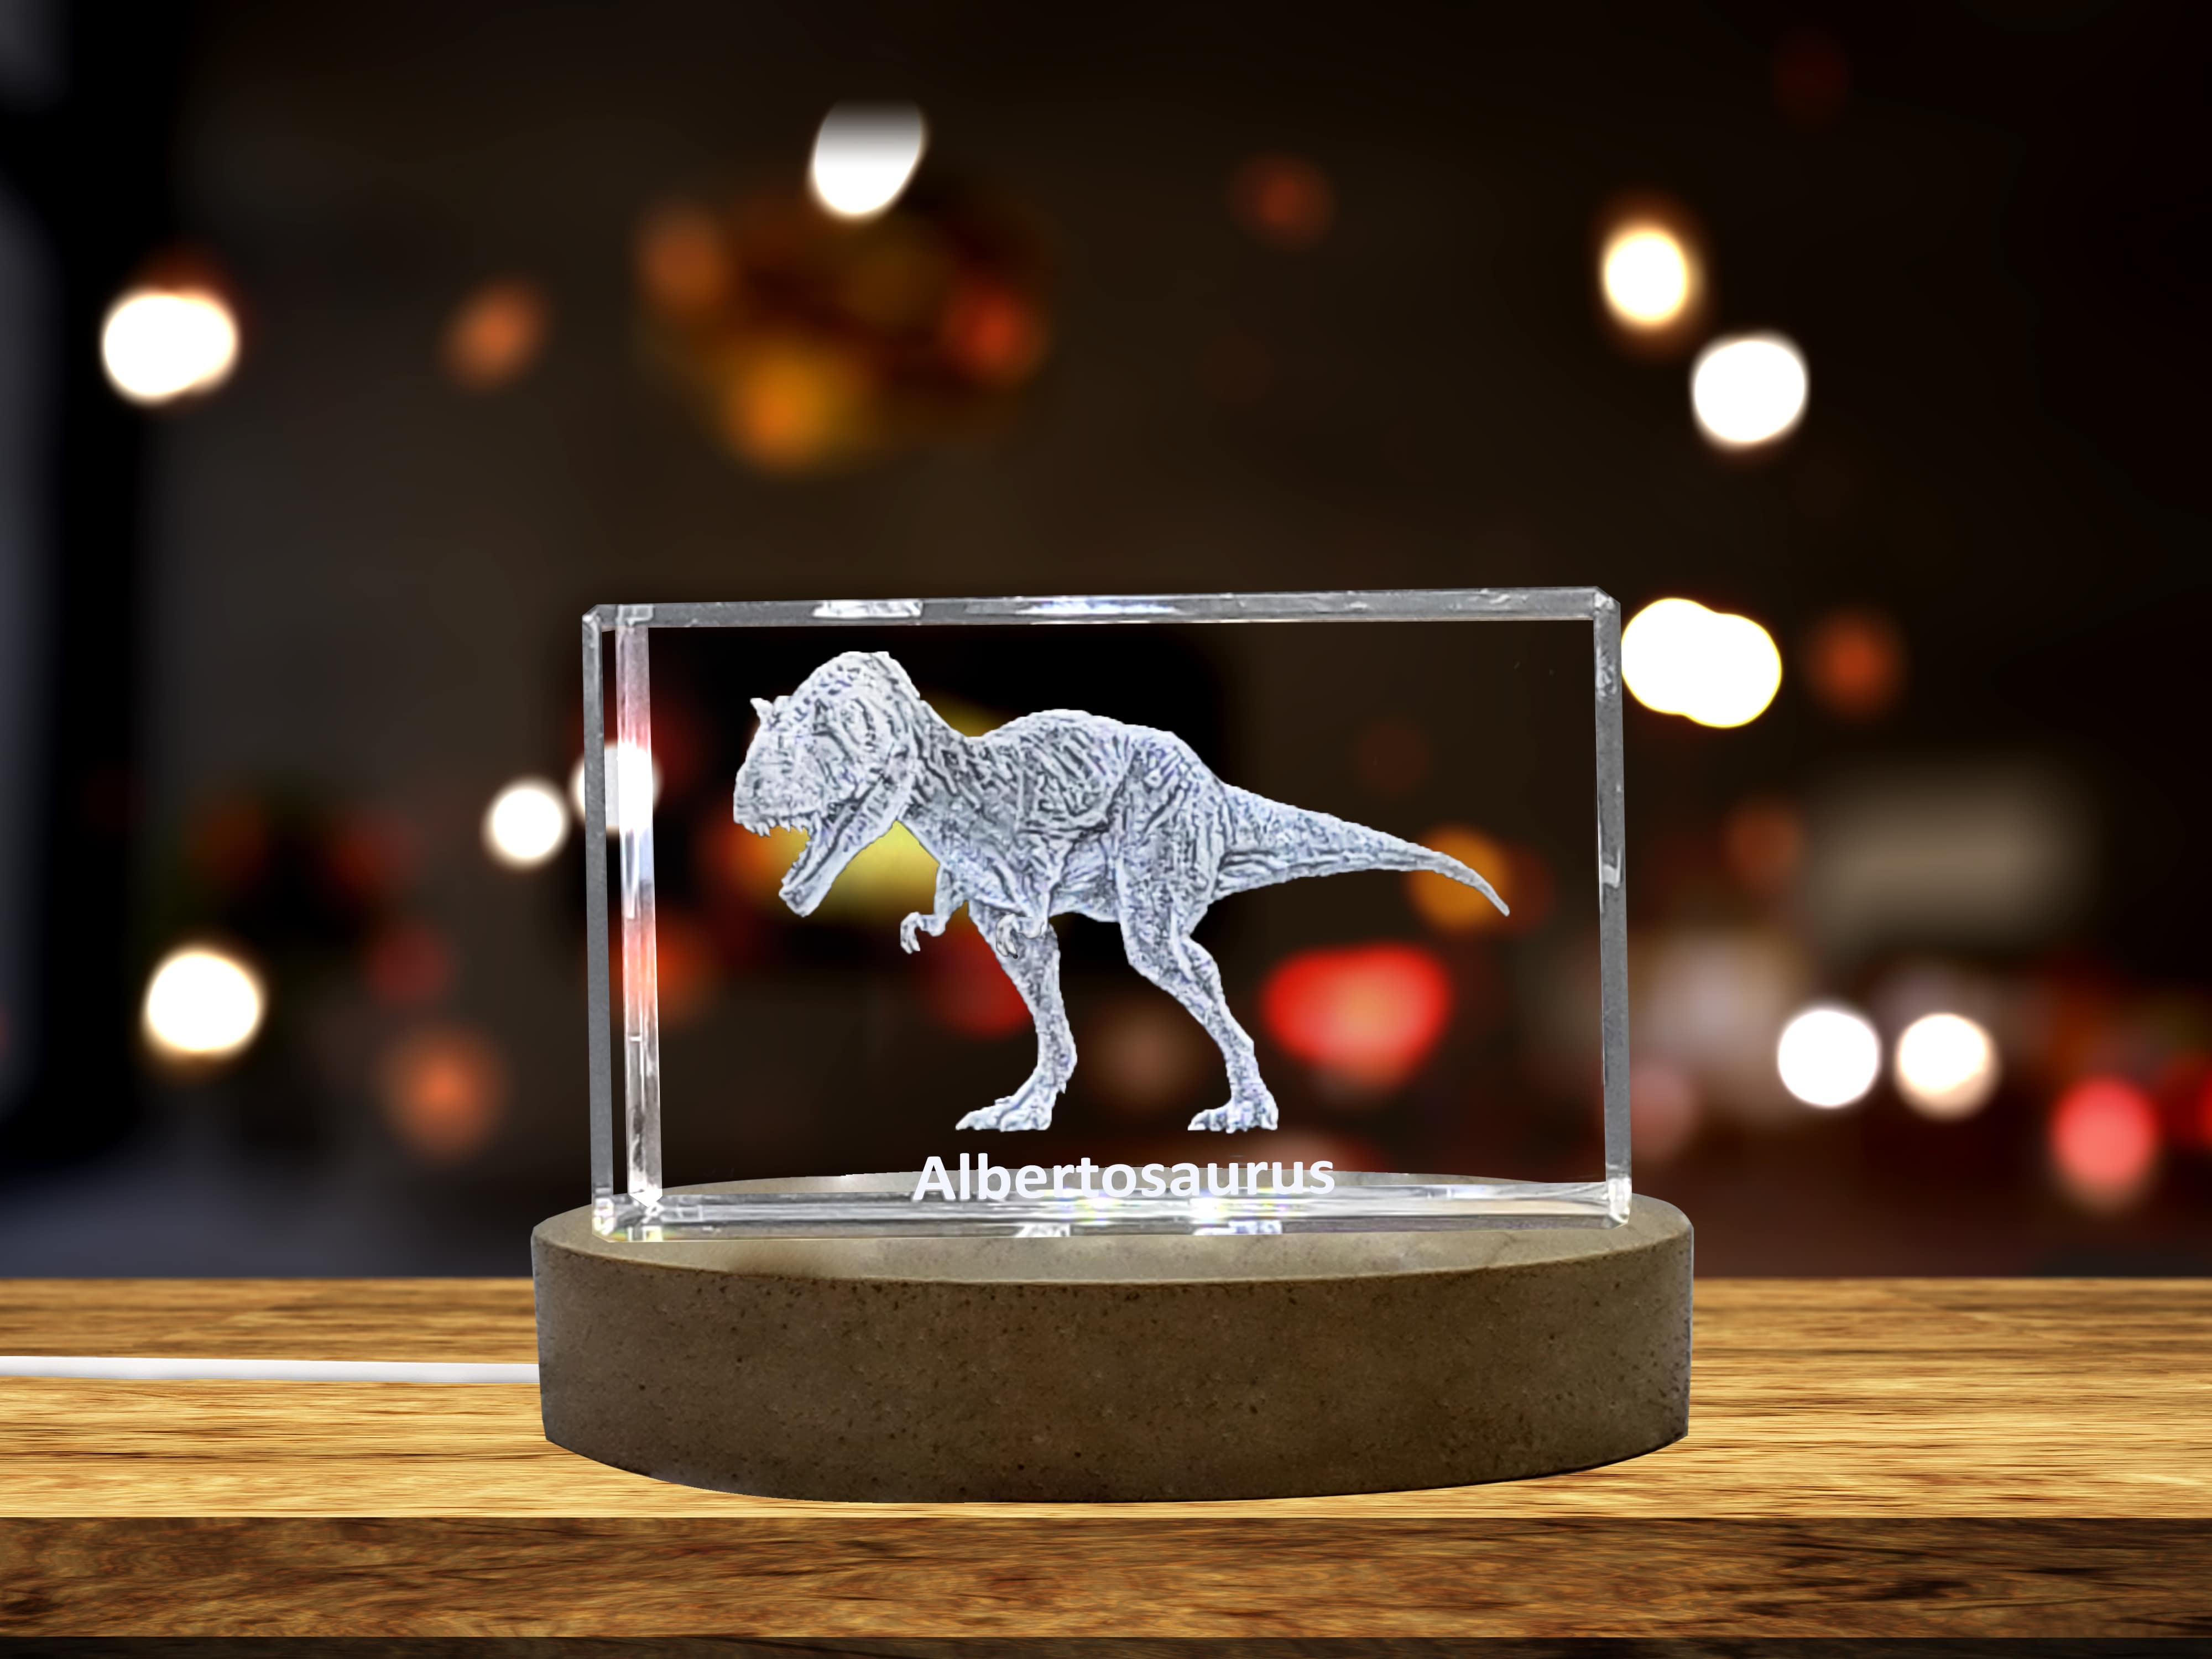 Albertosaurus Dinosaur 3D Engraved Crystal 3D Engraved Crystal Keepsake/Gift/Decor/Collectible/Souvenir A&B Crystal Collection